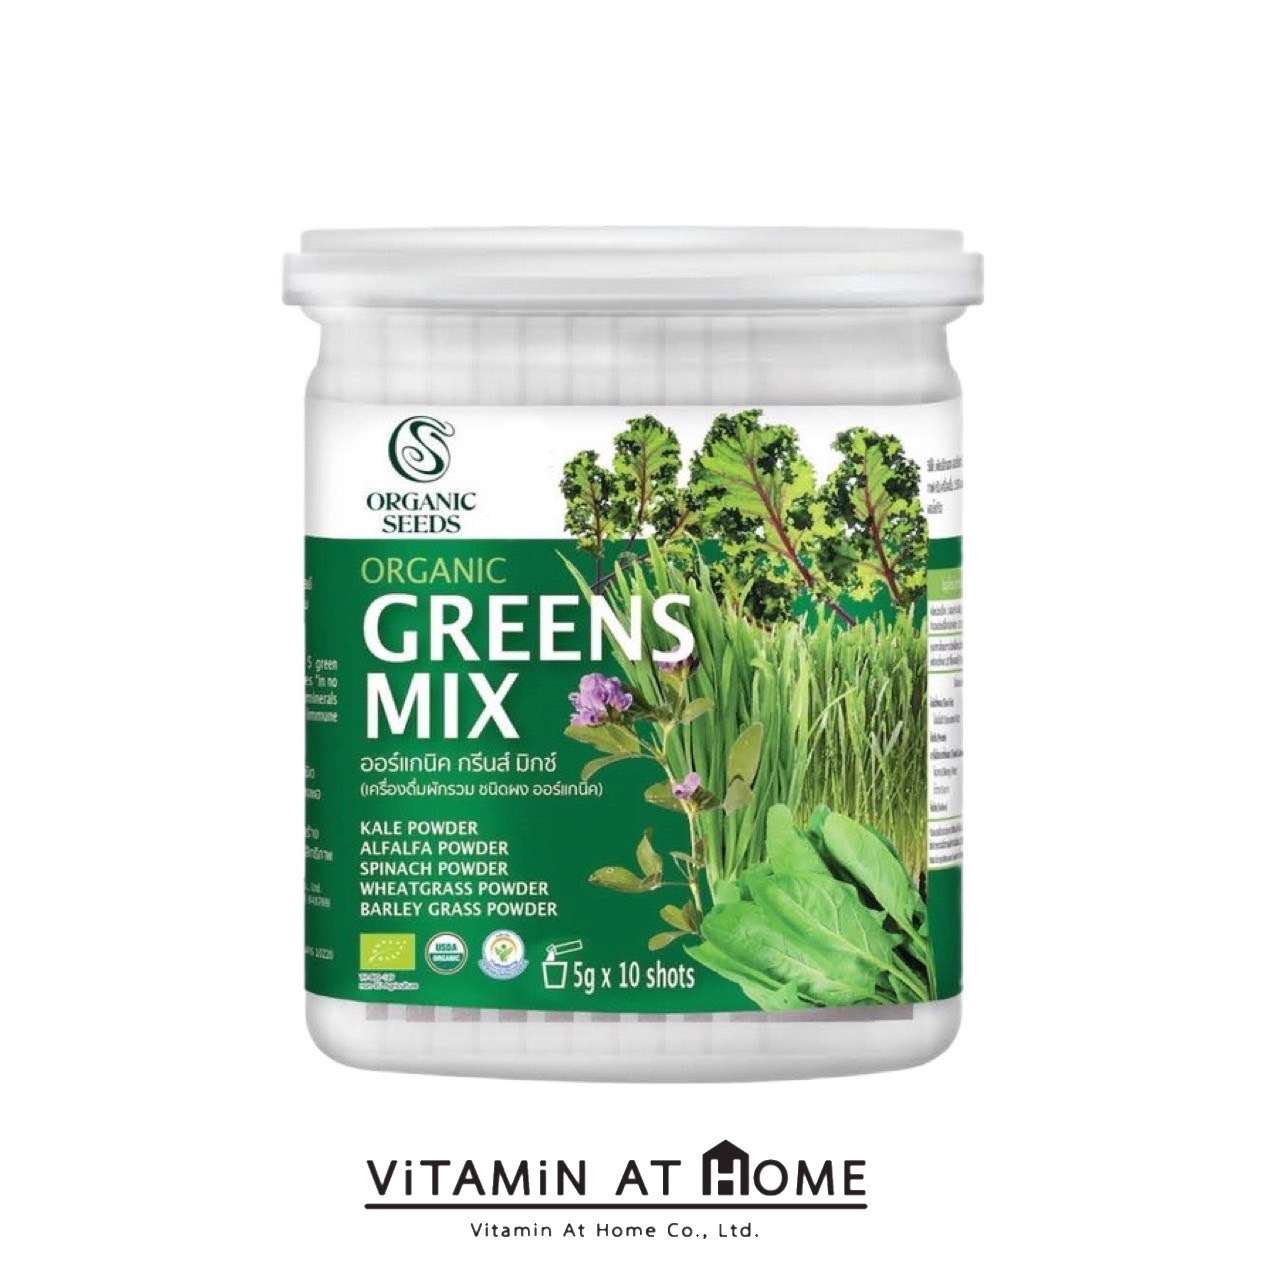 Organic Green Mix 50g/ ออร์แกนิค กรีนส์ มิกซ์ 50 กรัม